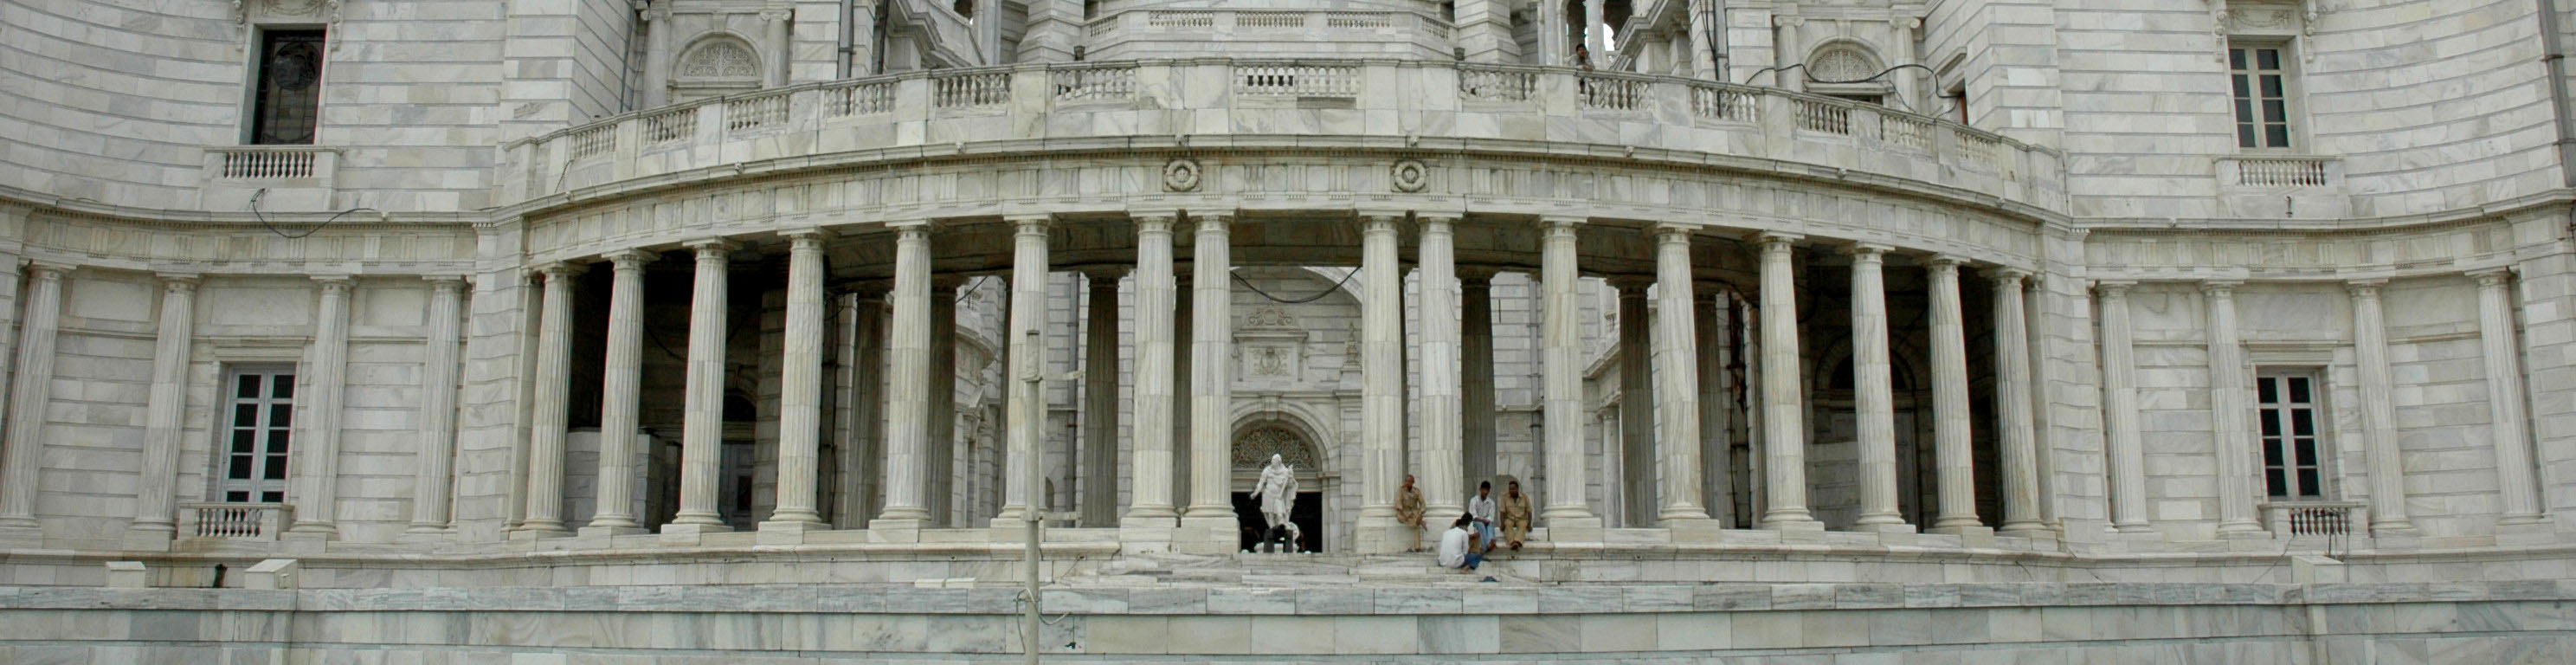 Victoria Memorial Kolkata Big Marble Building West Bengal India 